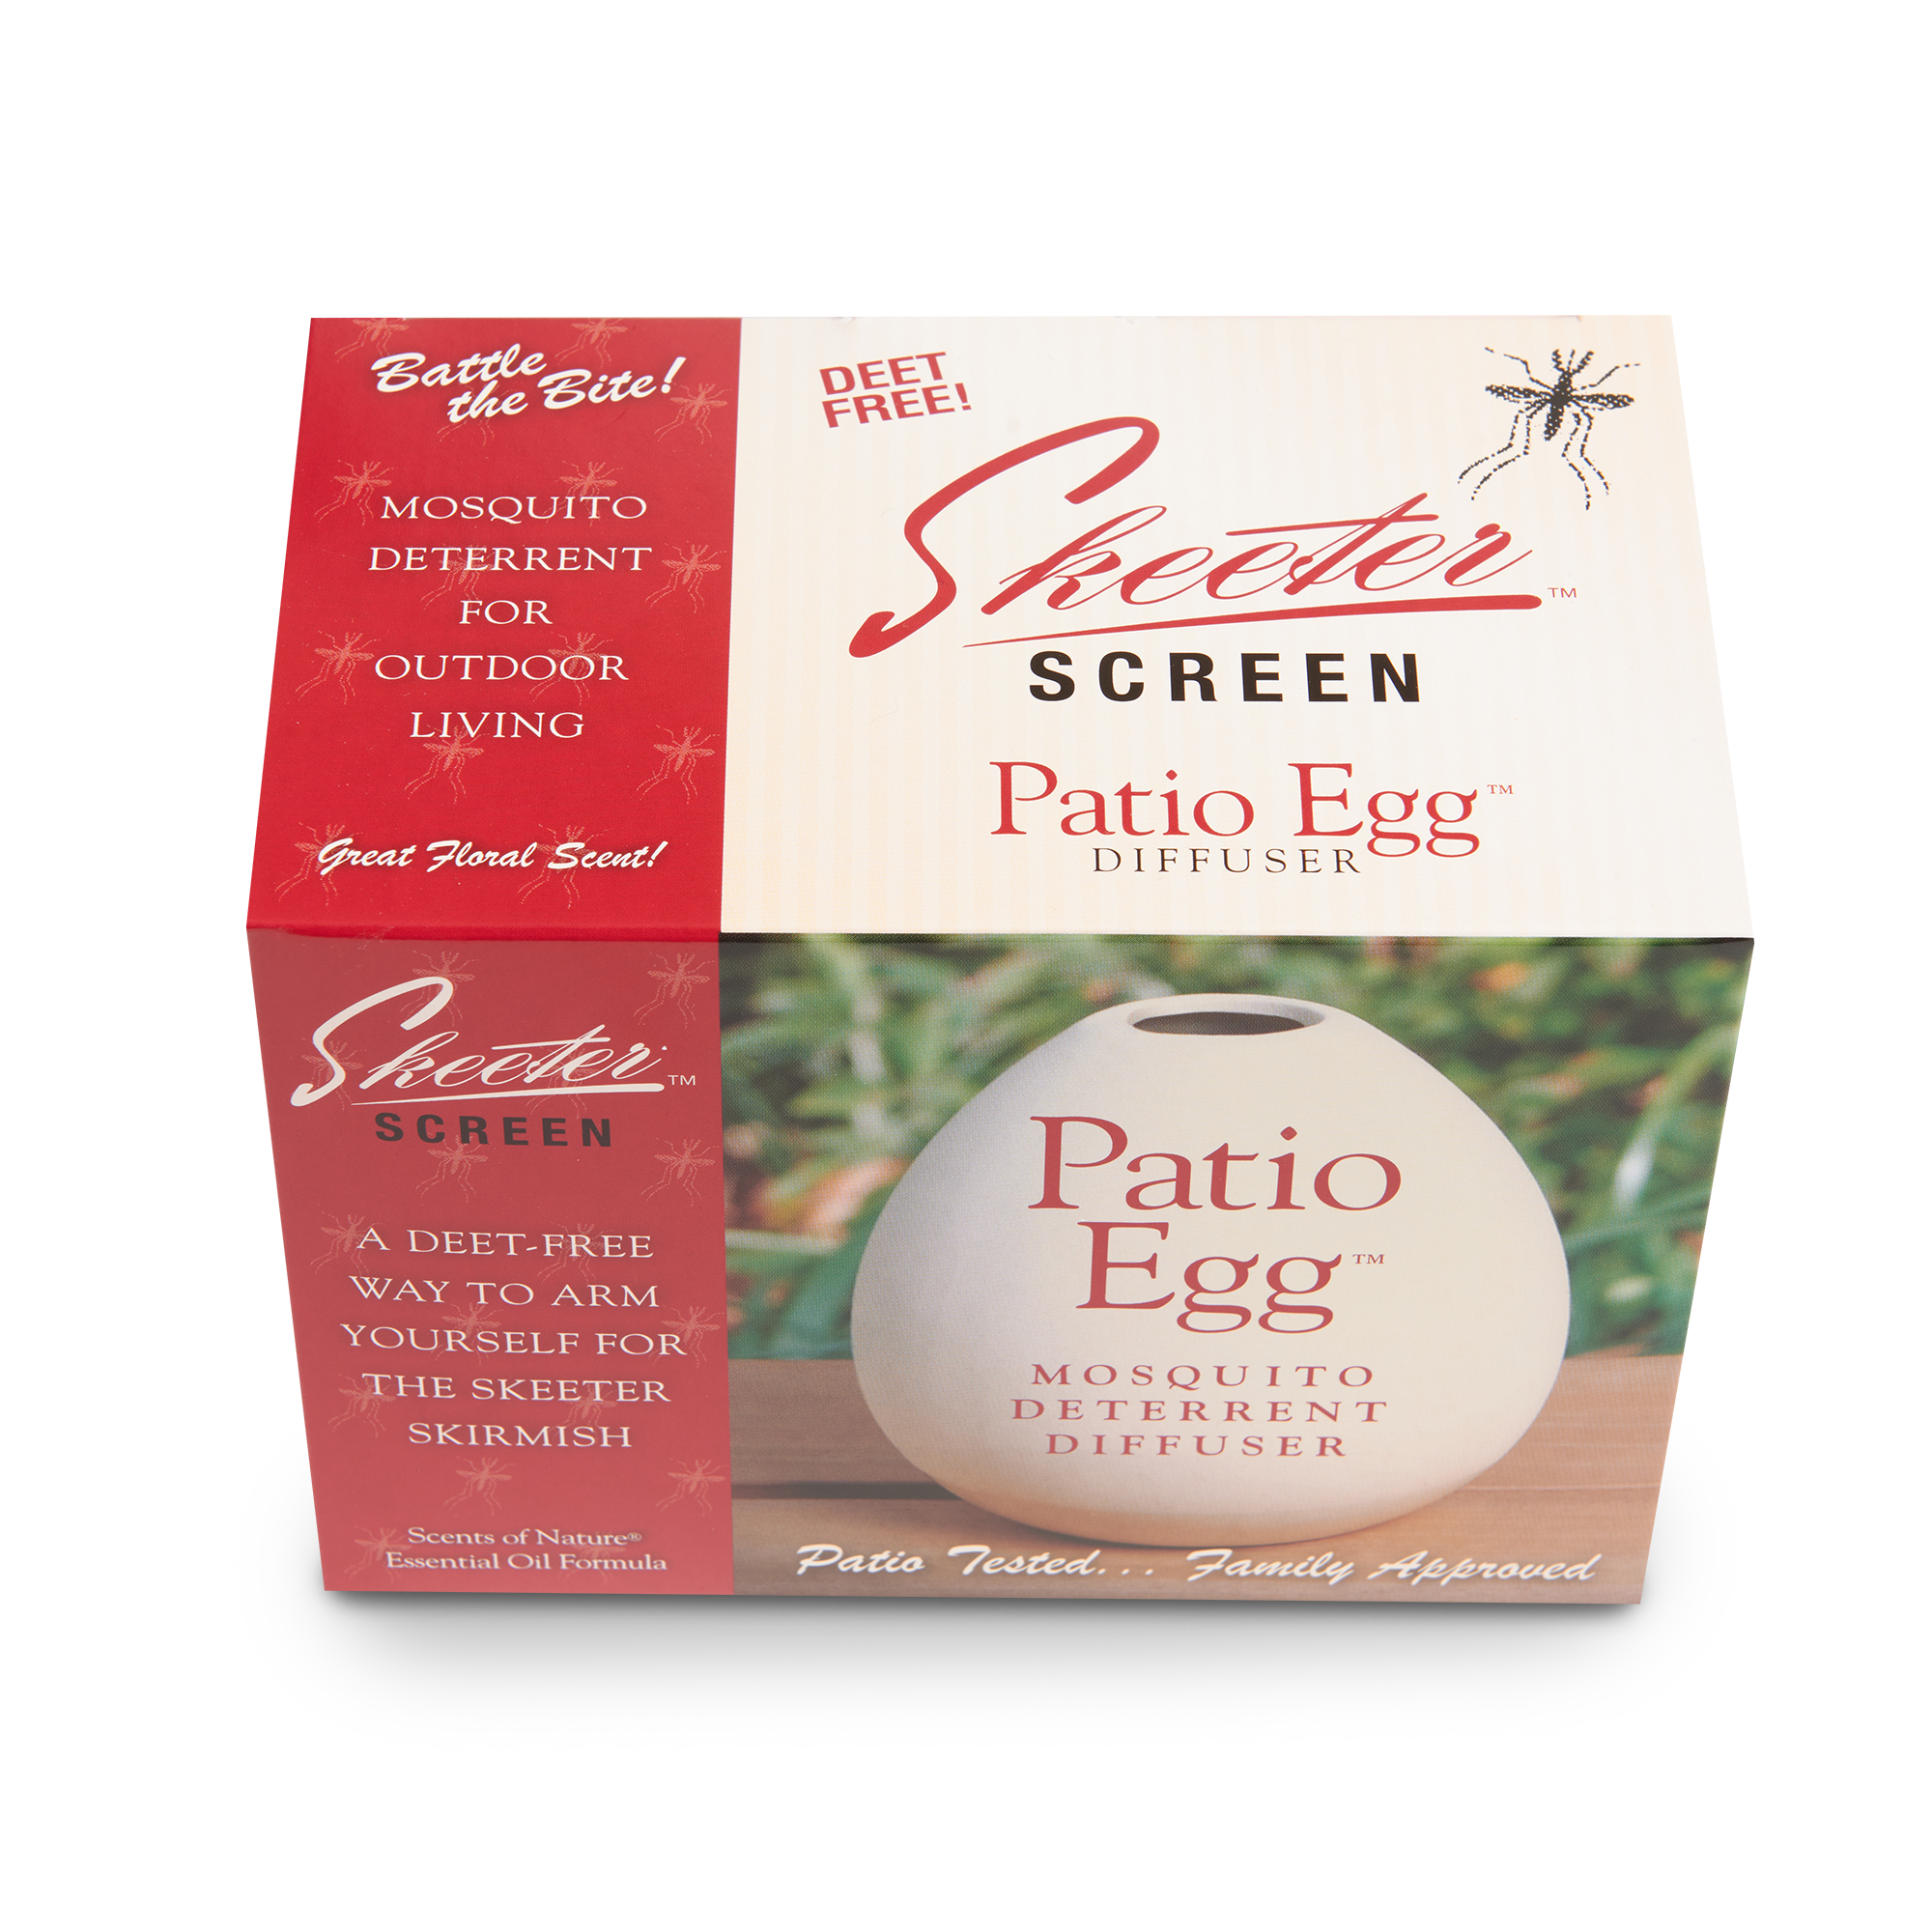 Skeeter Screen Bundle: Patio Egg & Yard Sticks